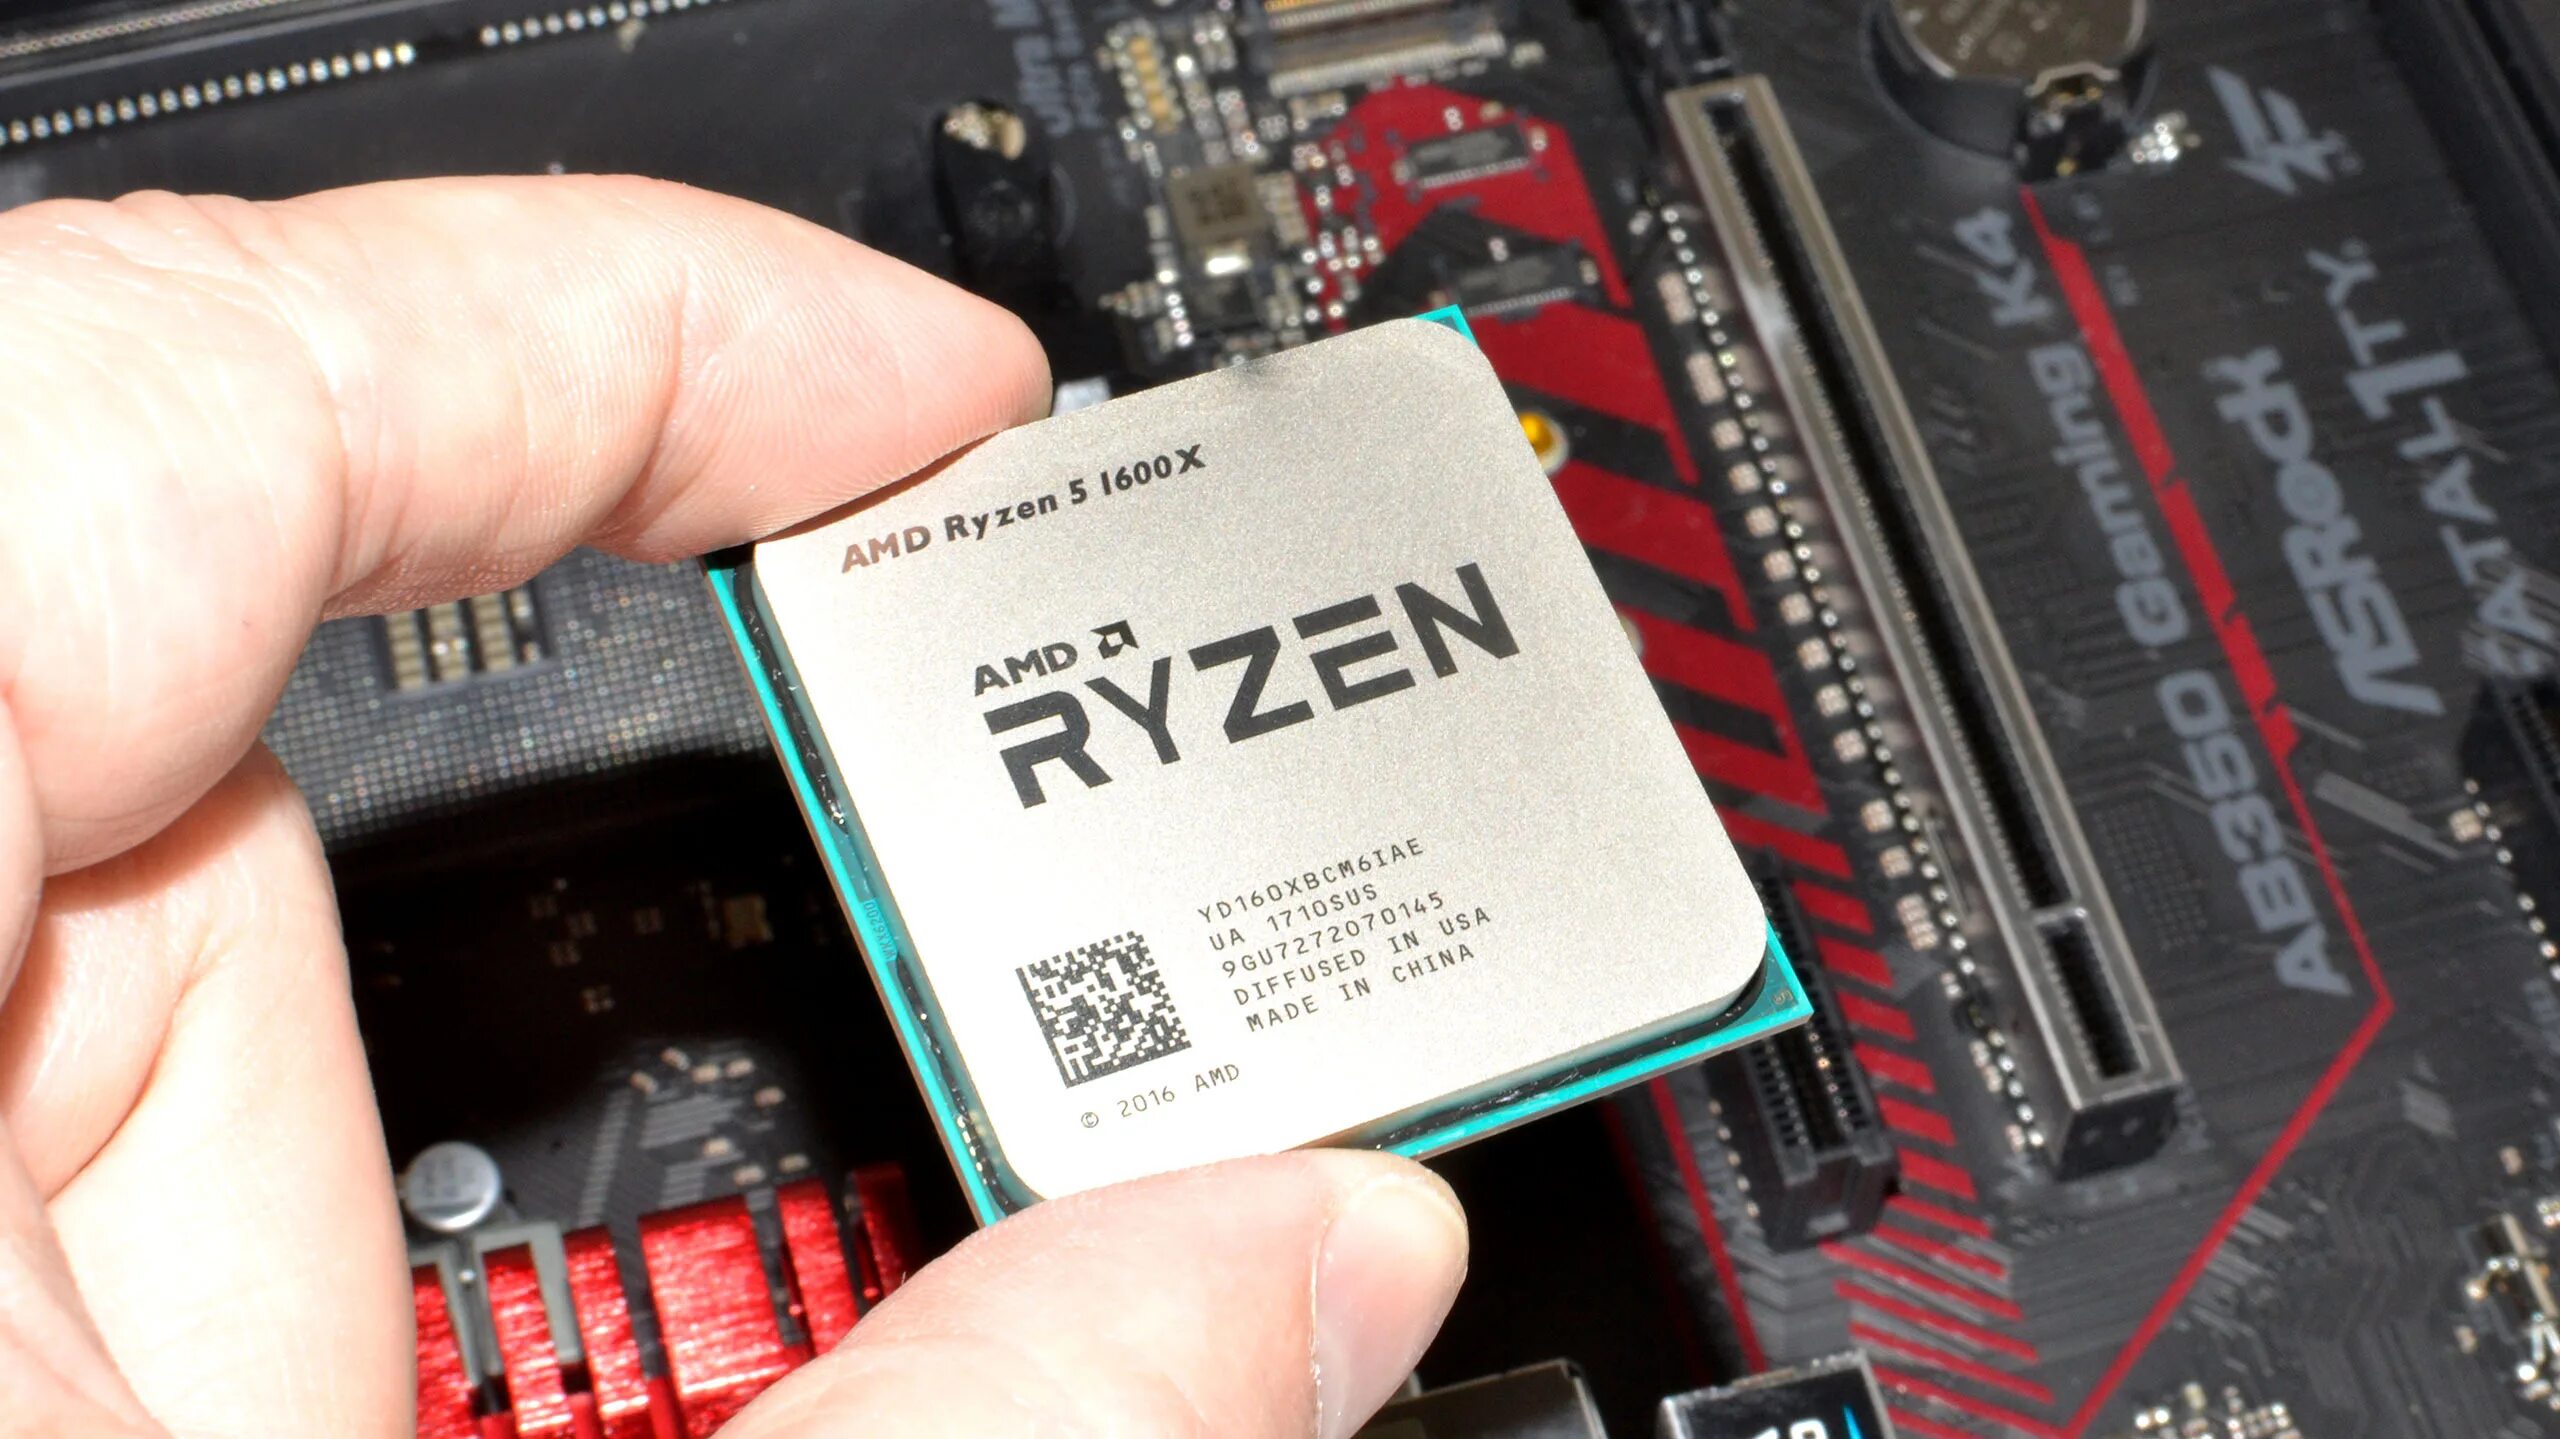 Оперативная память для процессоров ryzen. Ryzen 5 1600x. AMD Ryzen 5 1600. AMD 1600x. AMD Ryzen 5 1600 Six-Core Processor 3.20 GHZ.